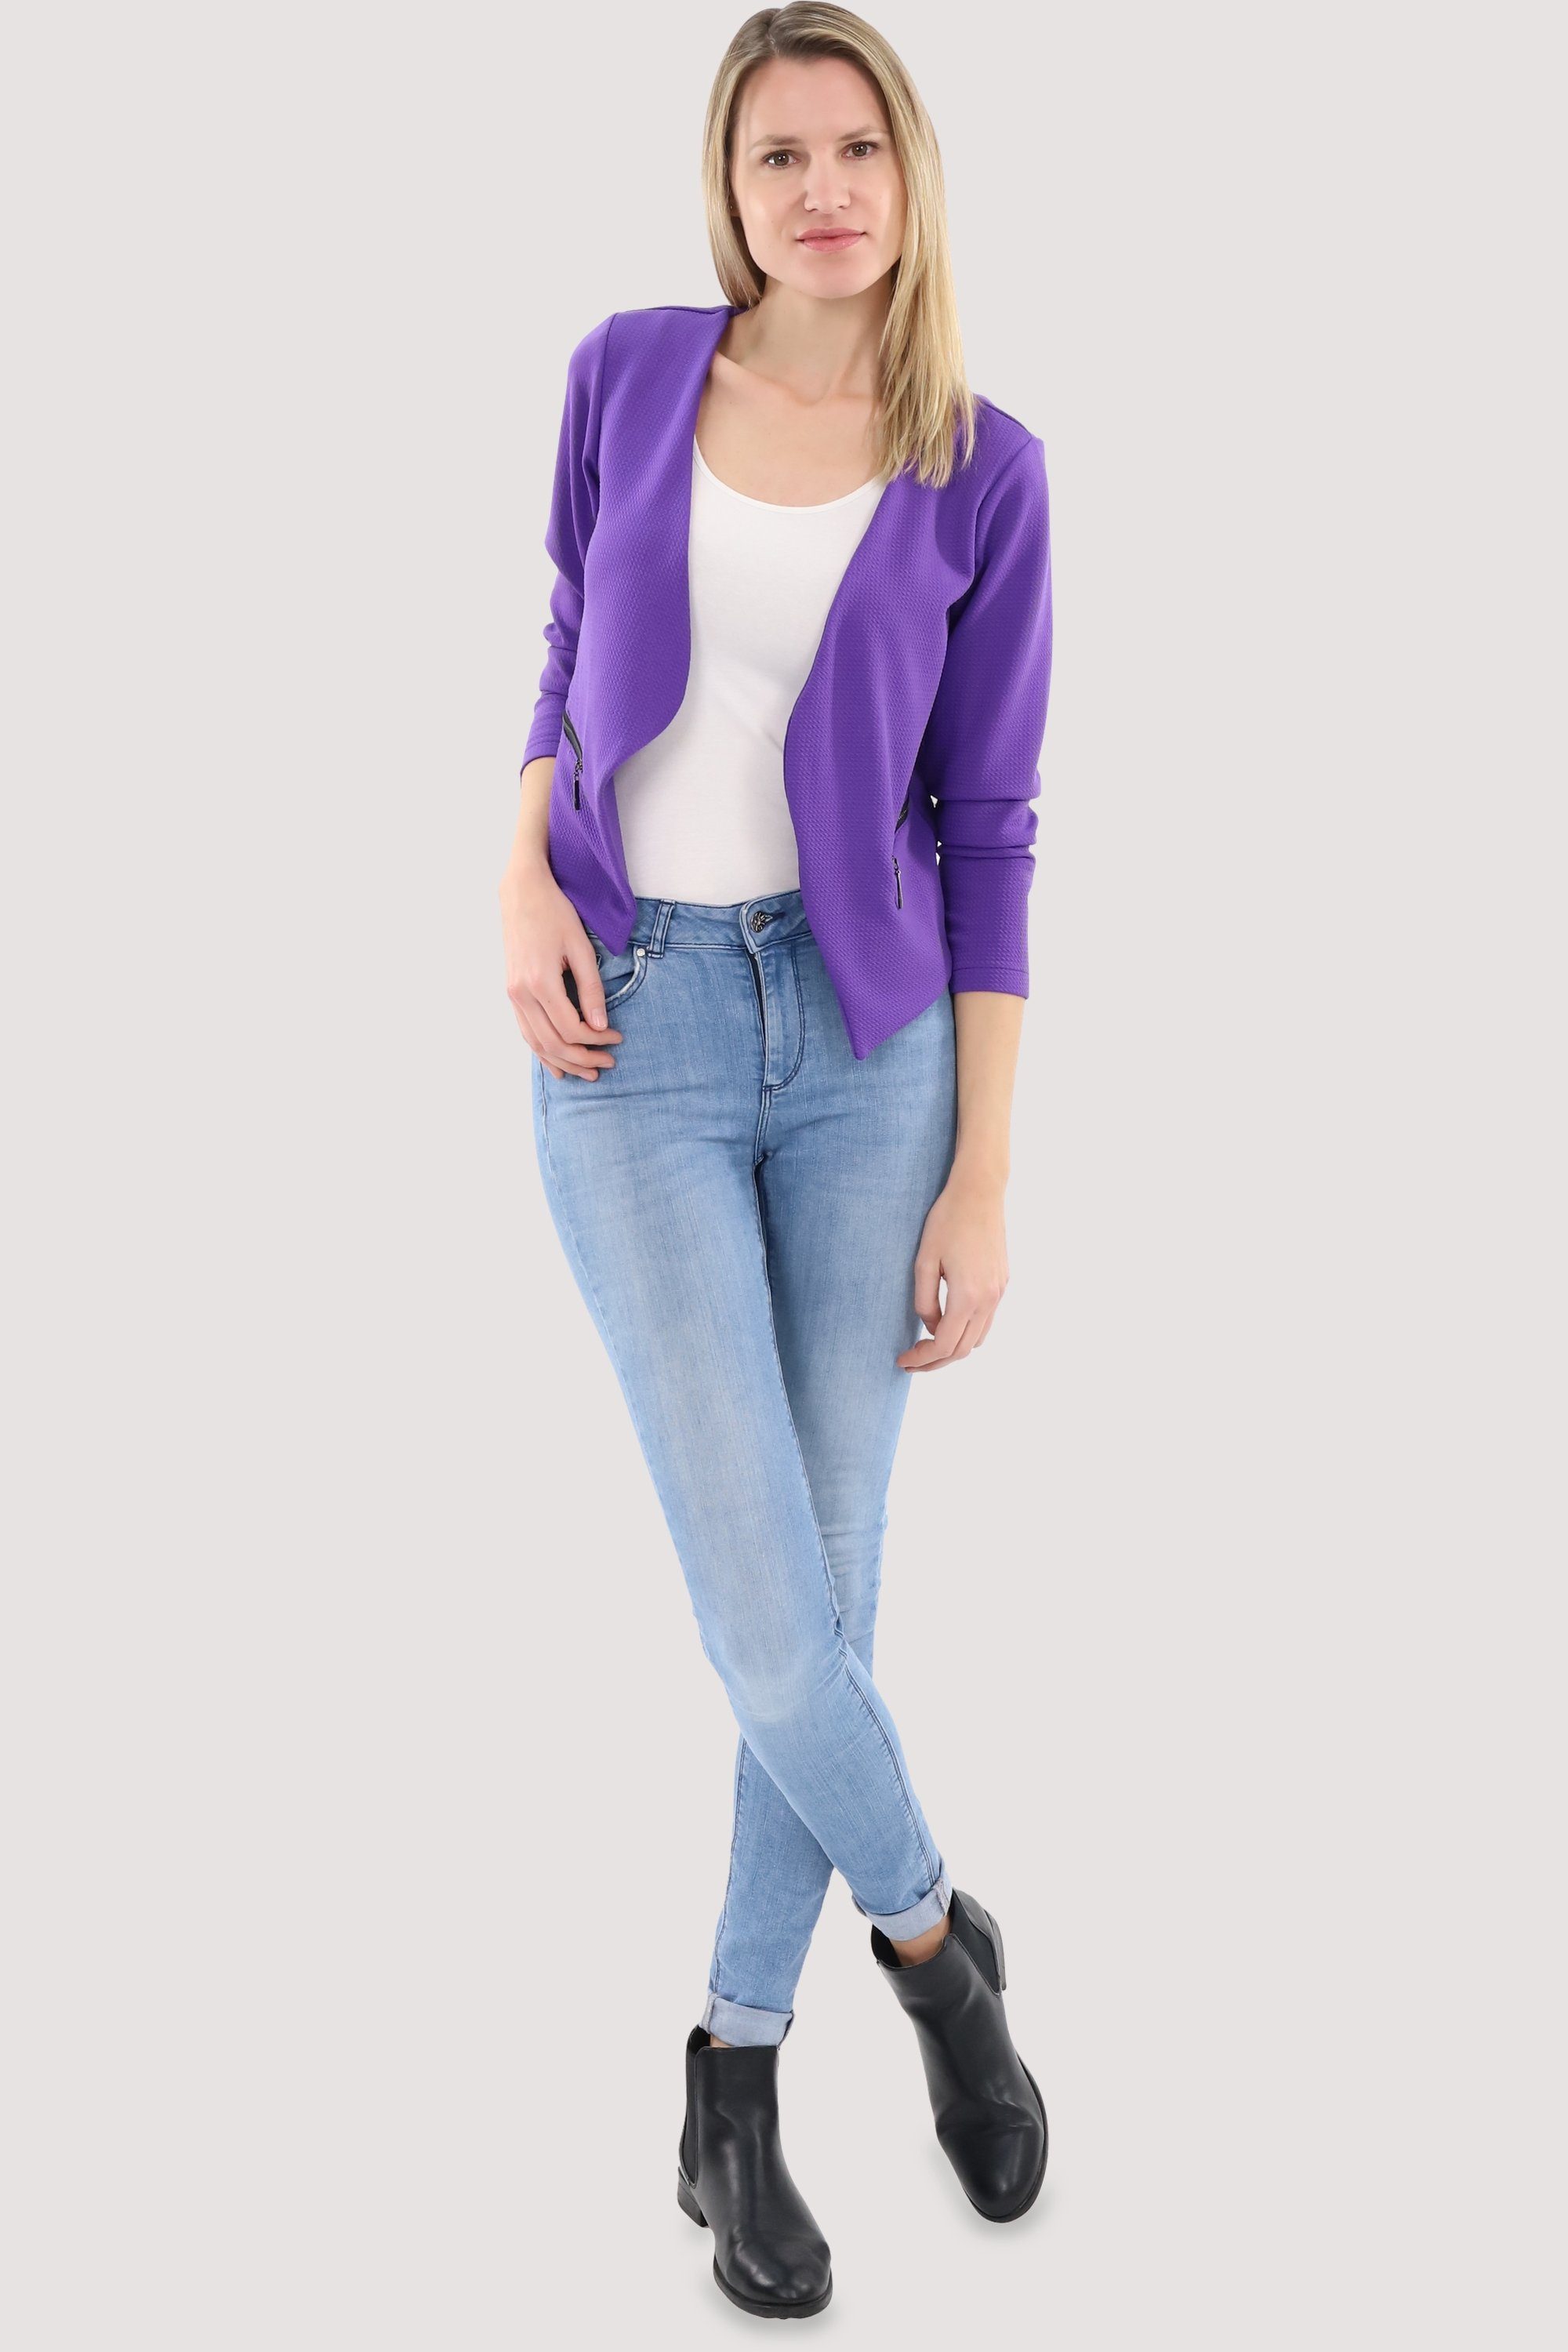 than fashion 6040 Sweatblazer Basic-Look im malito violett Jackenblazer more